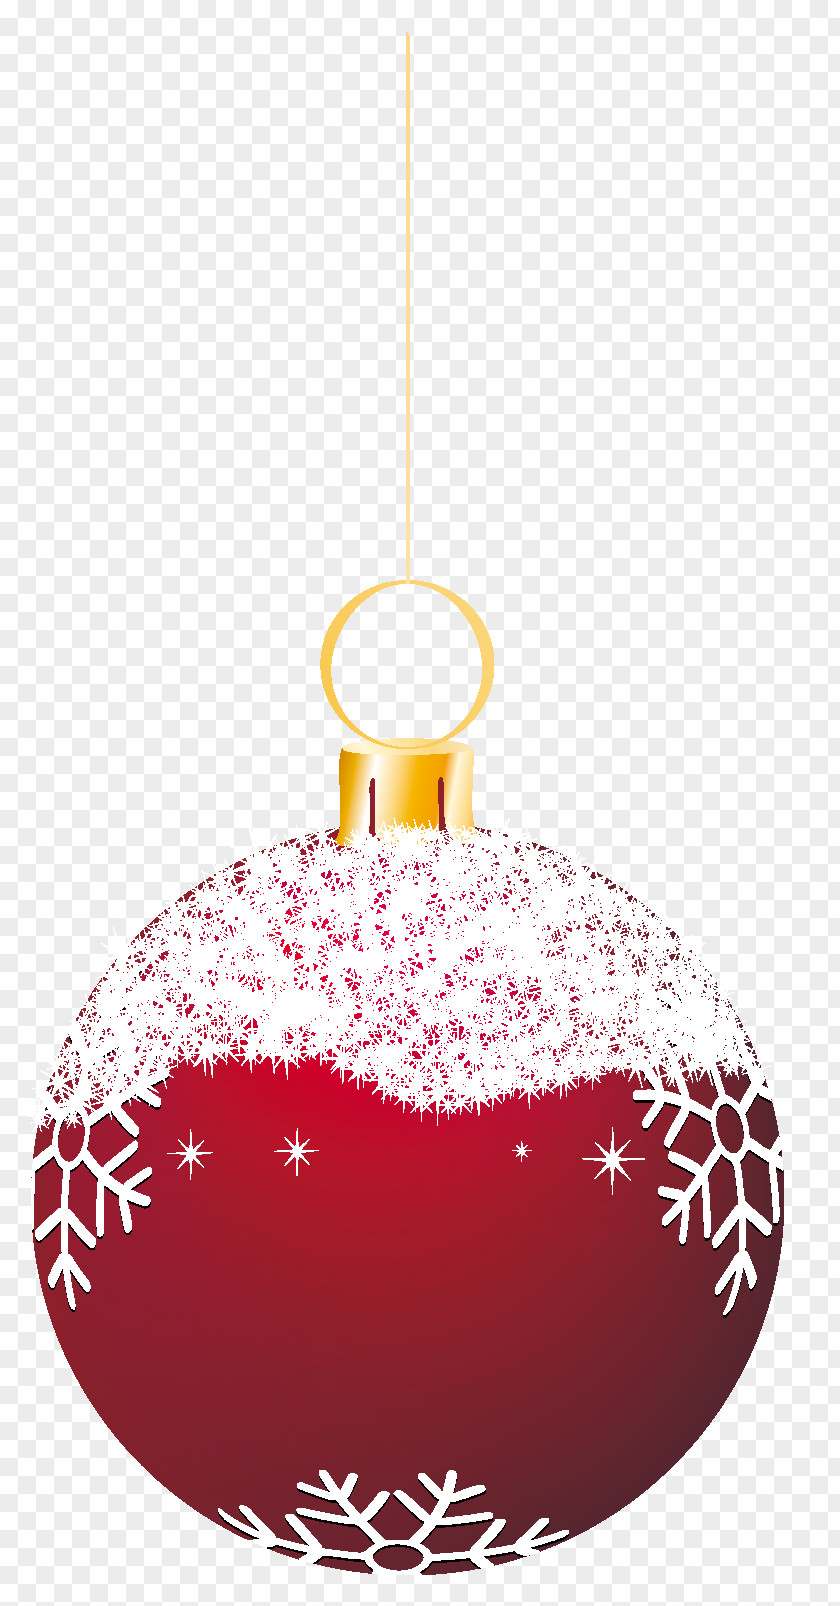 Transparent Red Snowy Christmas Ball Ornament Clipart Decoration Santa Claus Clip Art PNG